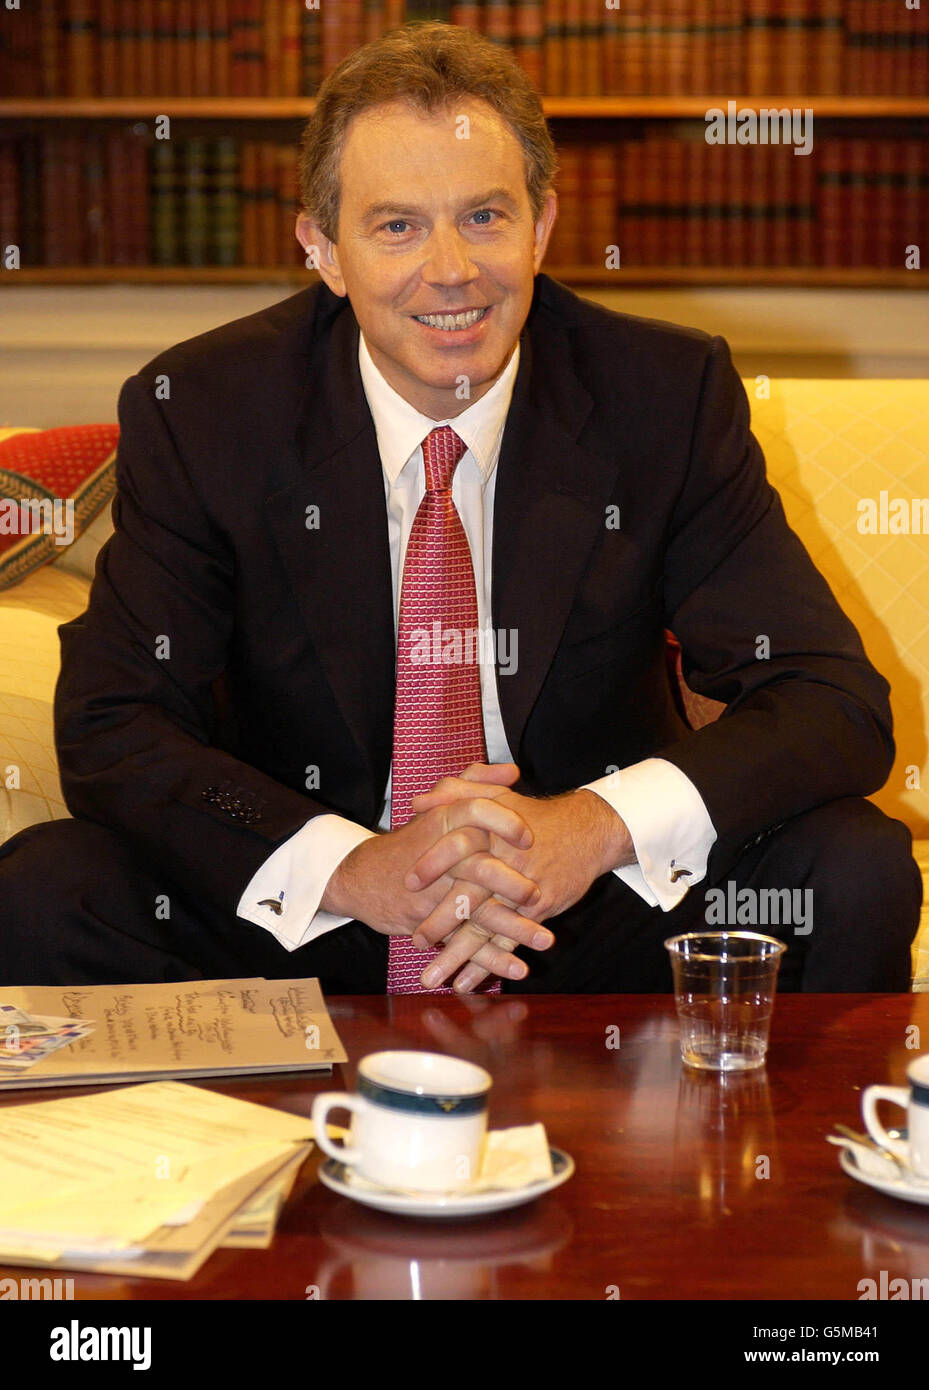 El primer ministro Tony Blair en el set del programa de la BBC Breakfast with Frost, después de que él apareció en el programa. Foto de stock